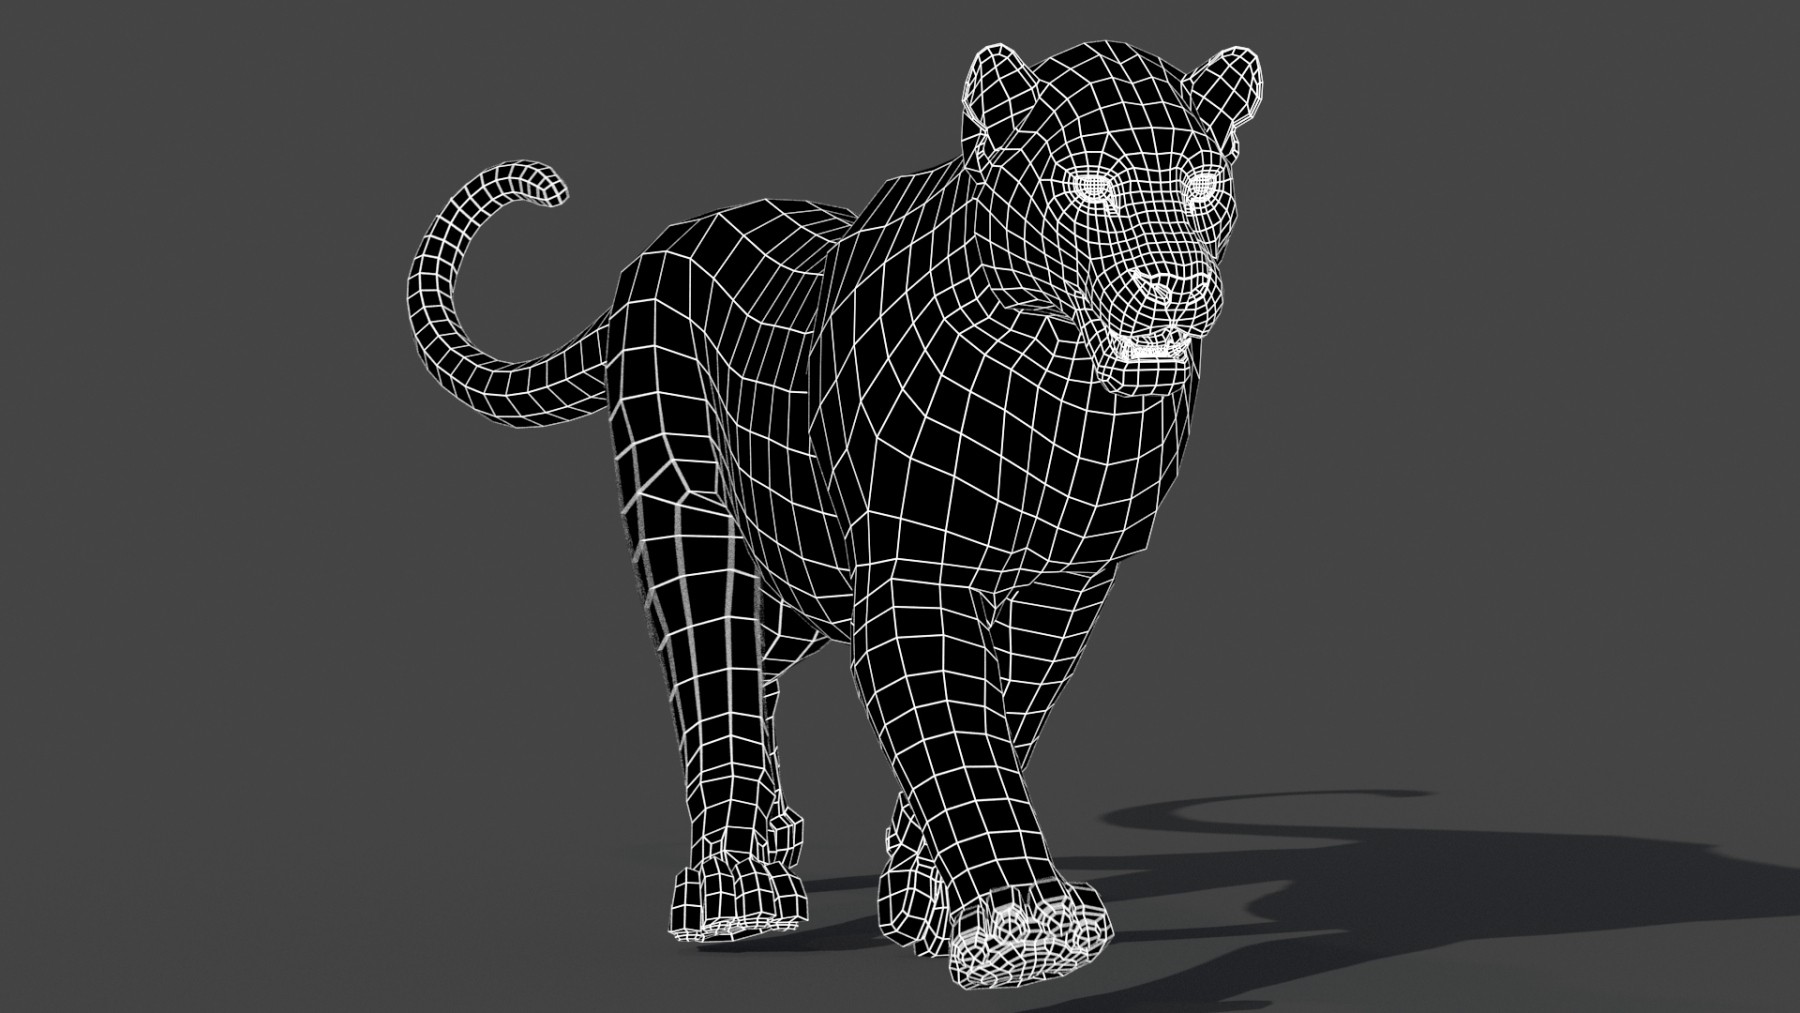 Black Panther Furry 3D Model